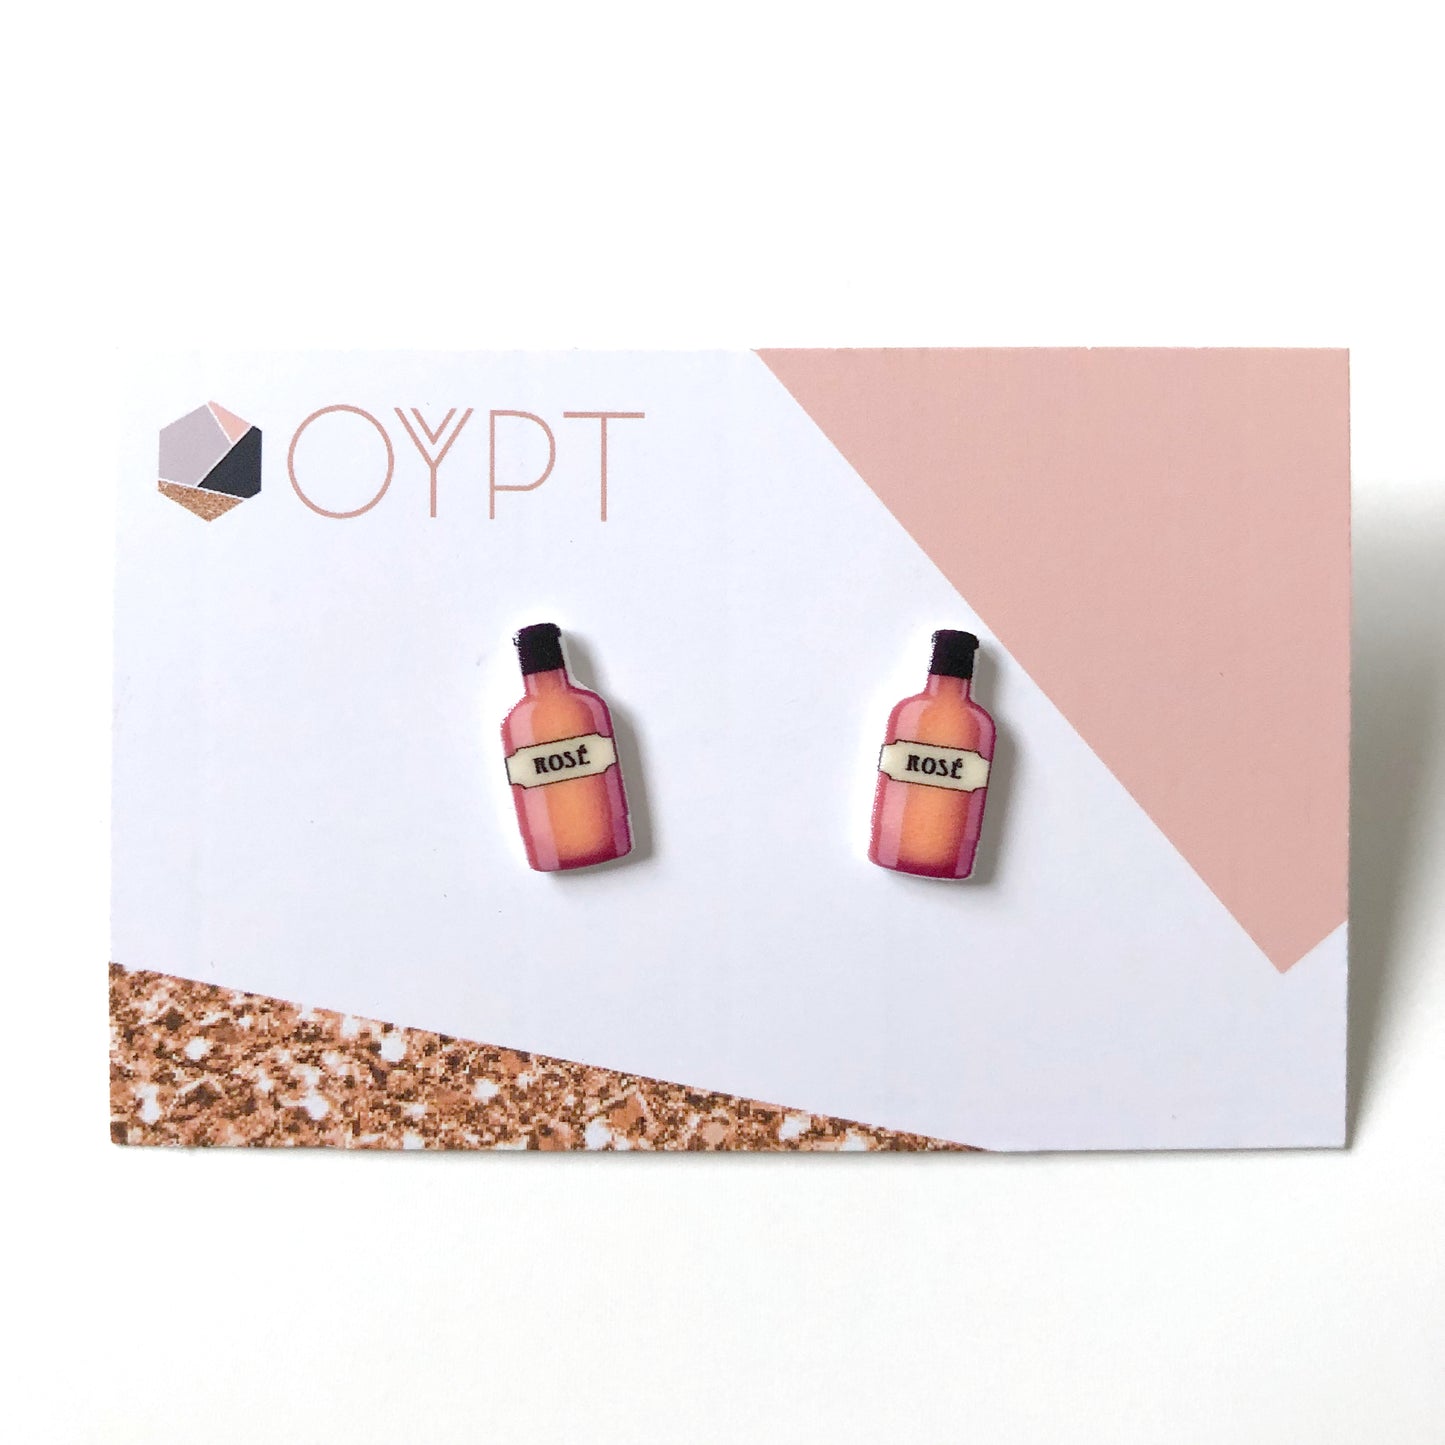 Rose wine bottle stud earrings - Quirky gift